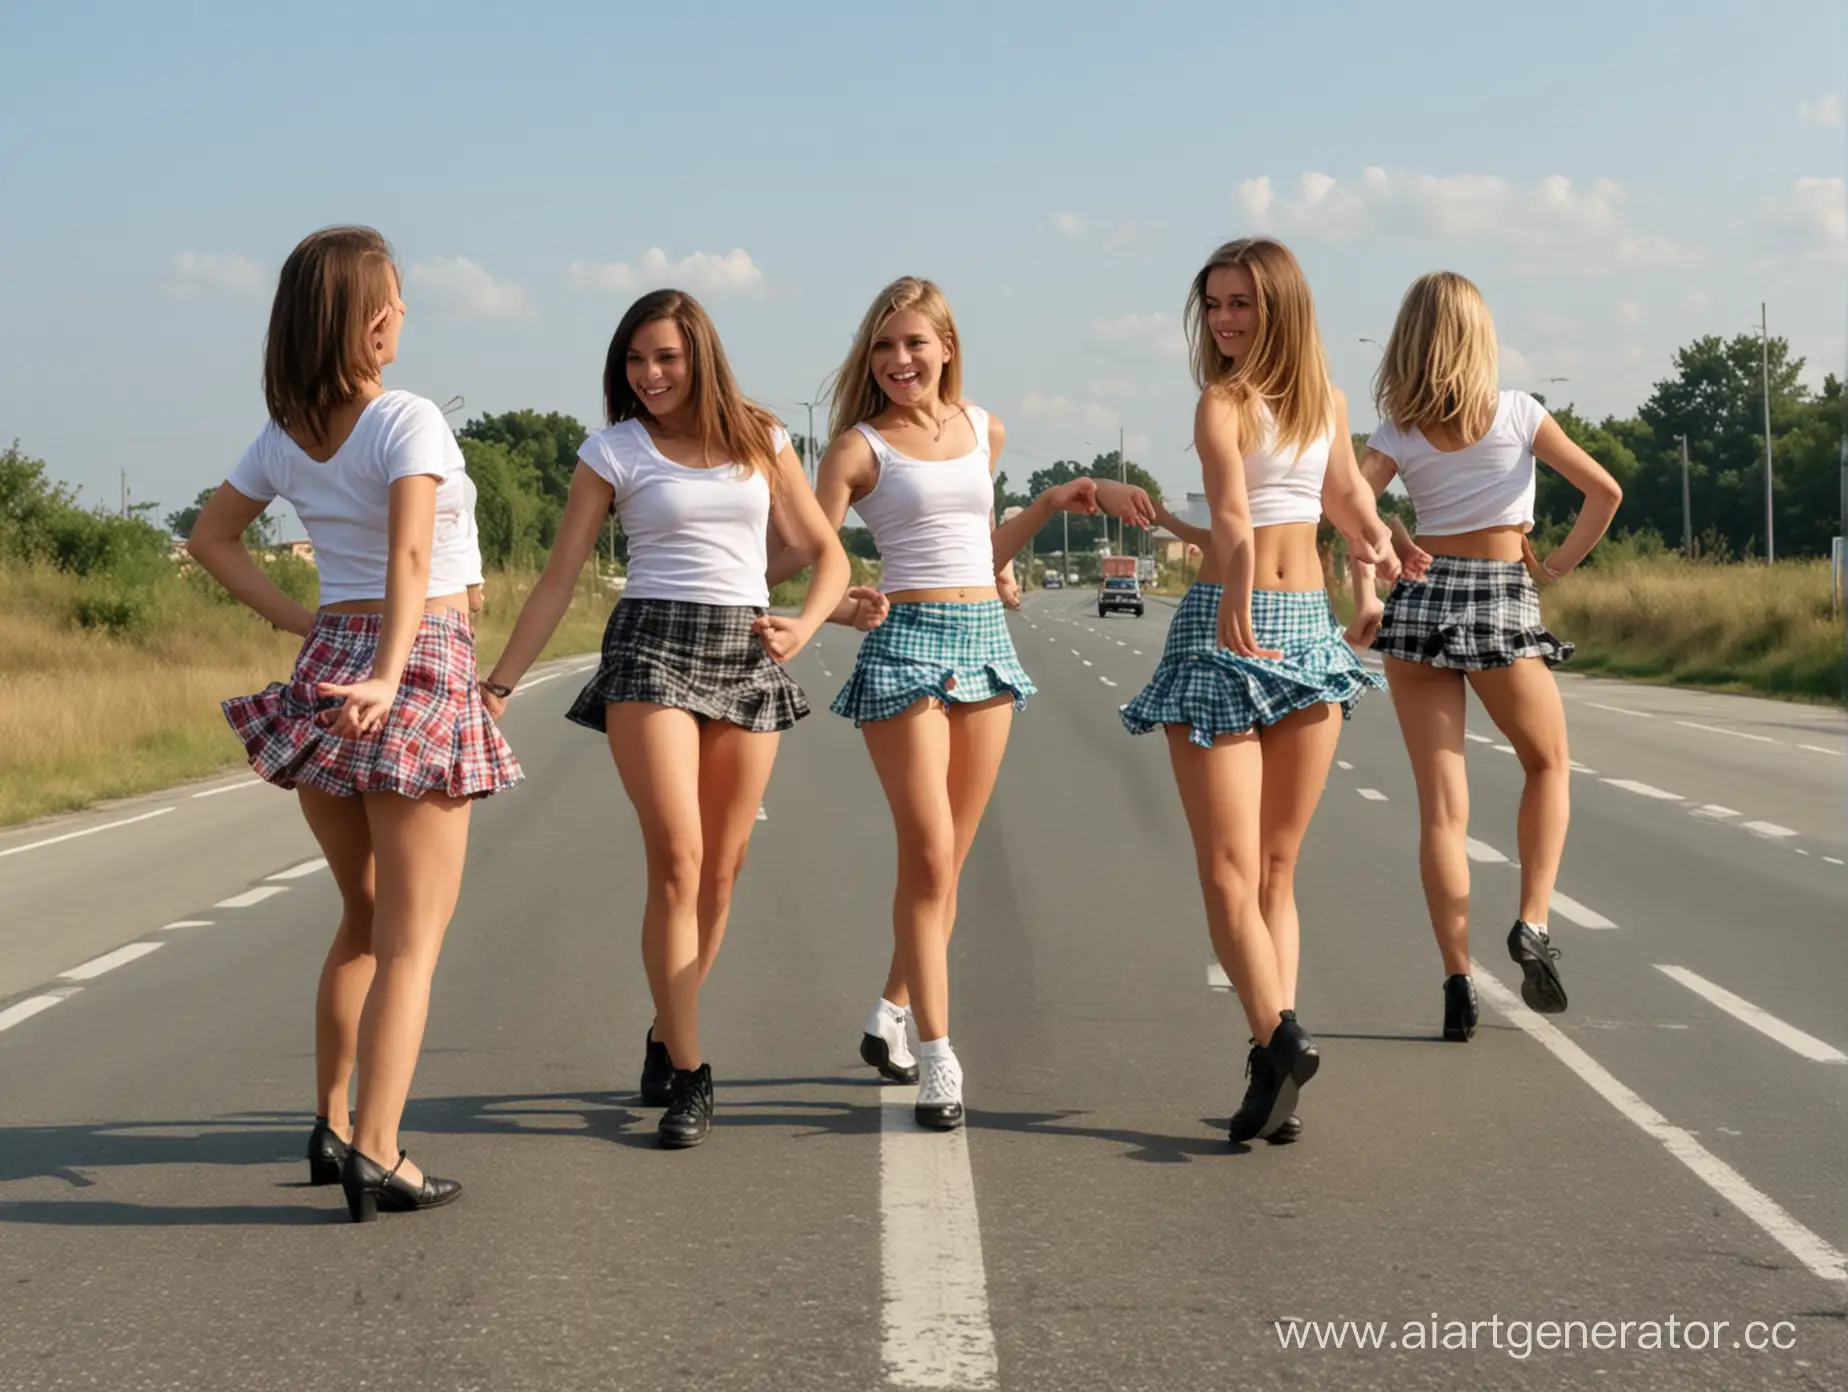 Youthful-Energy-Girls-Dancing-in-Mini-Skirts-on-an-Urban-Street